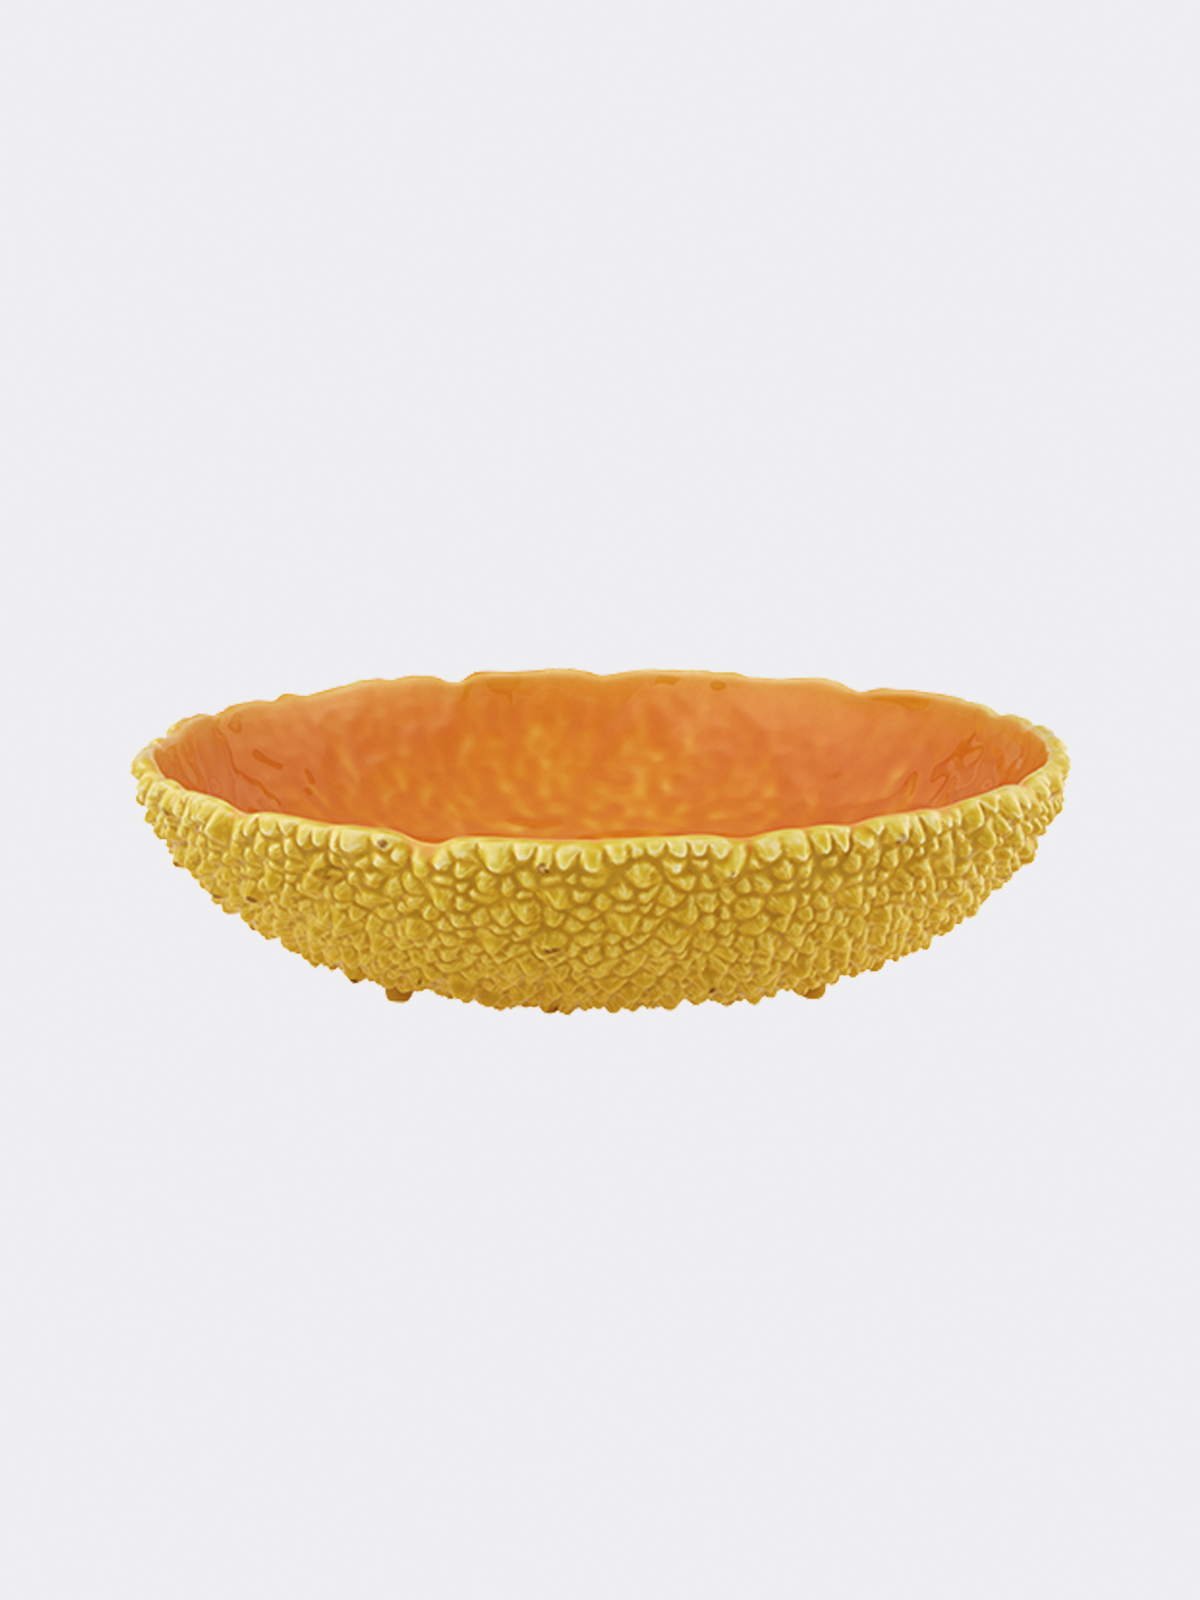 Bordallo Pinheiro Handmade Finish Yellow and Orange Amazonia Fruit Bowl